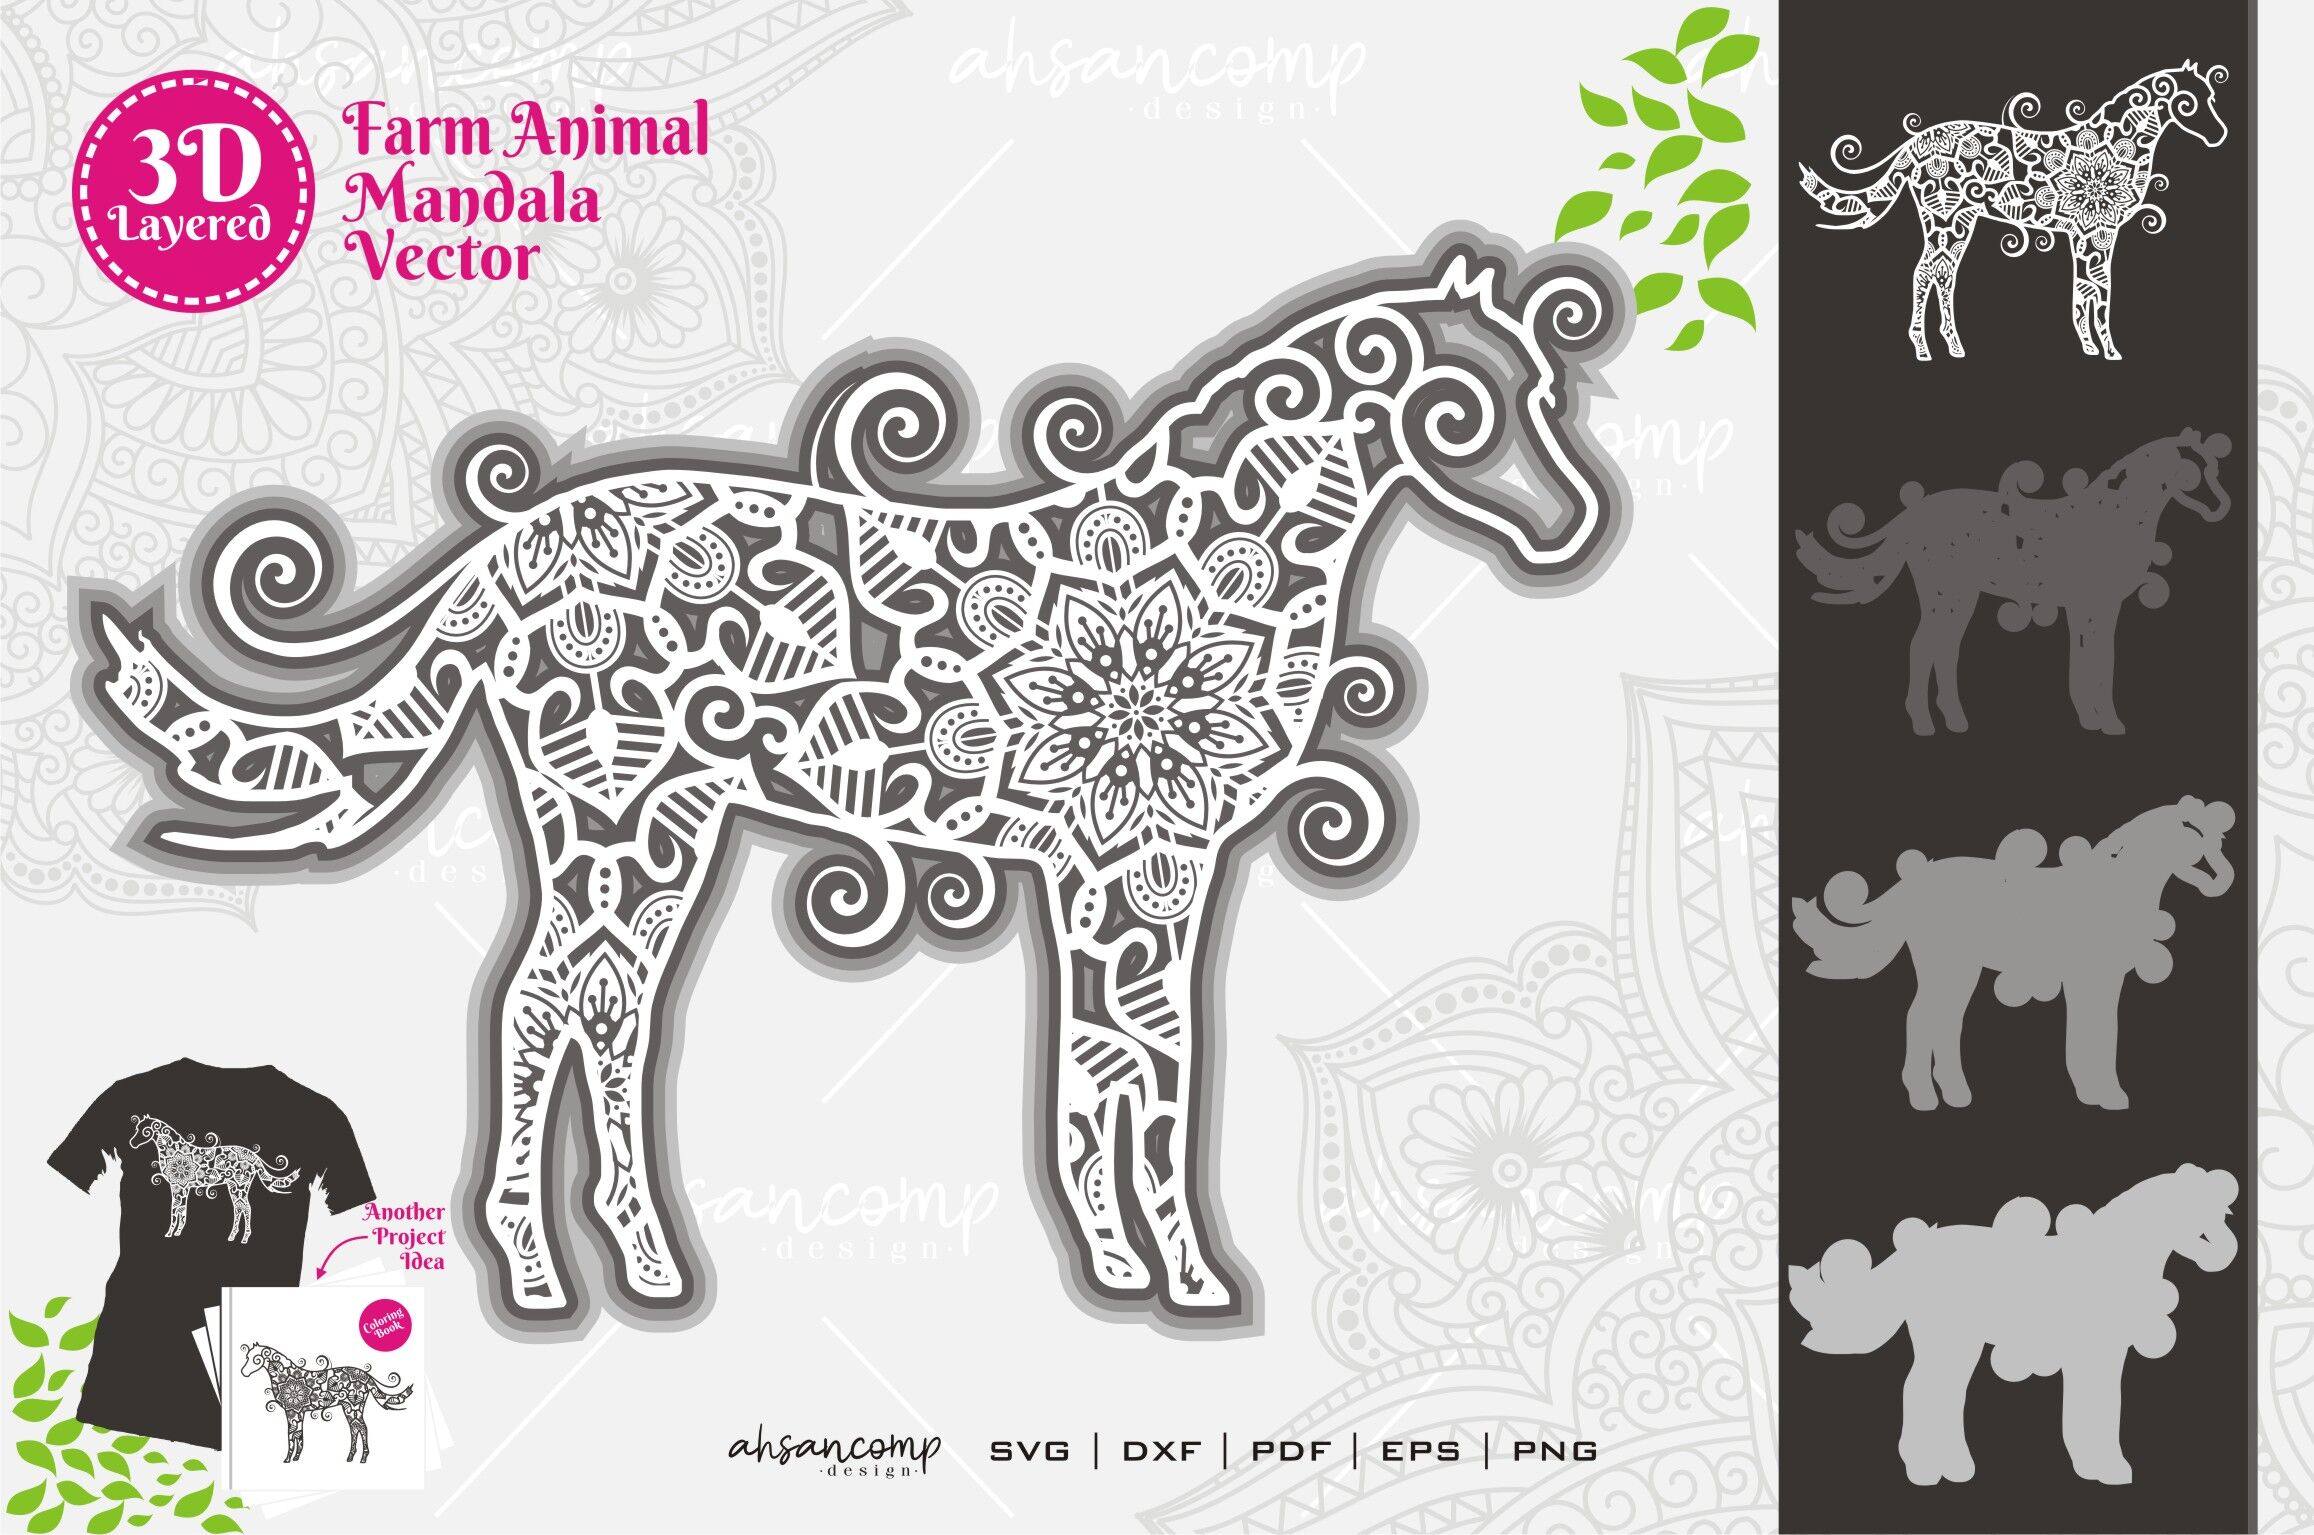 Farm Animal Mandala Svg 3d Layered 13 By Ahsancomp Studio Thehungryjpeg Com